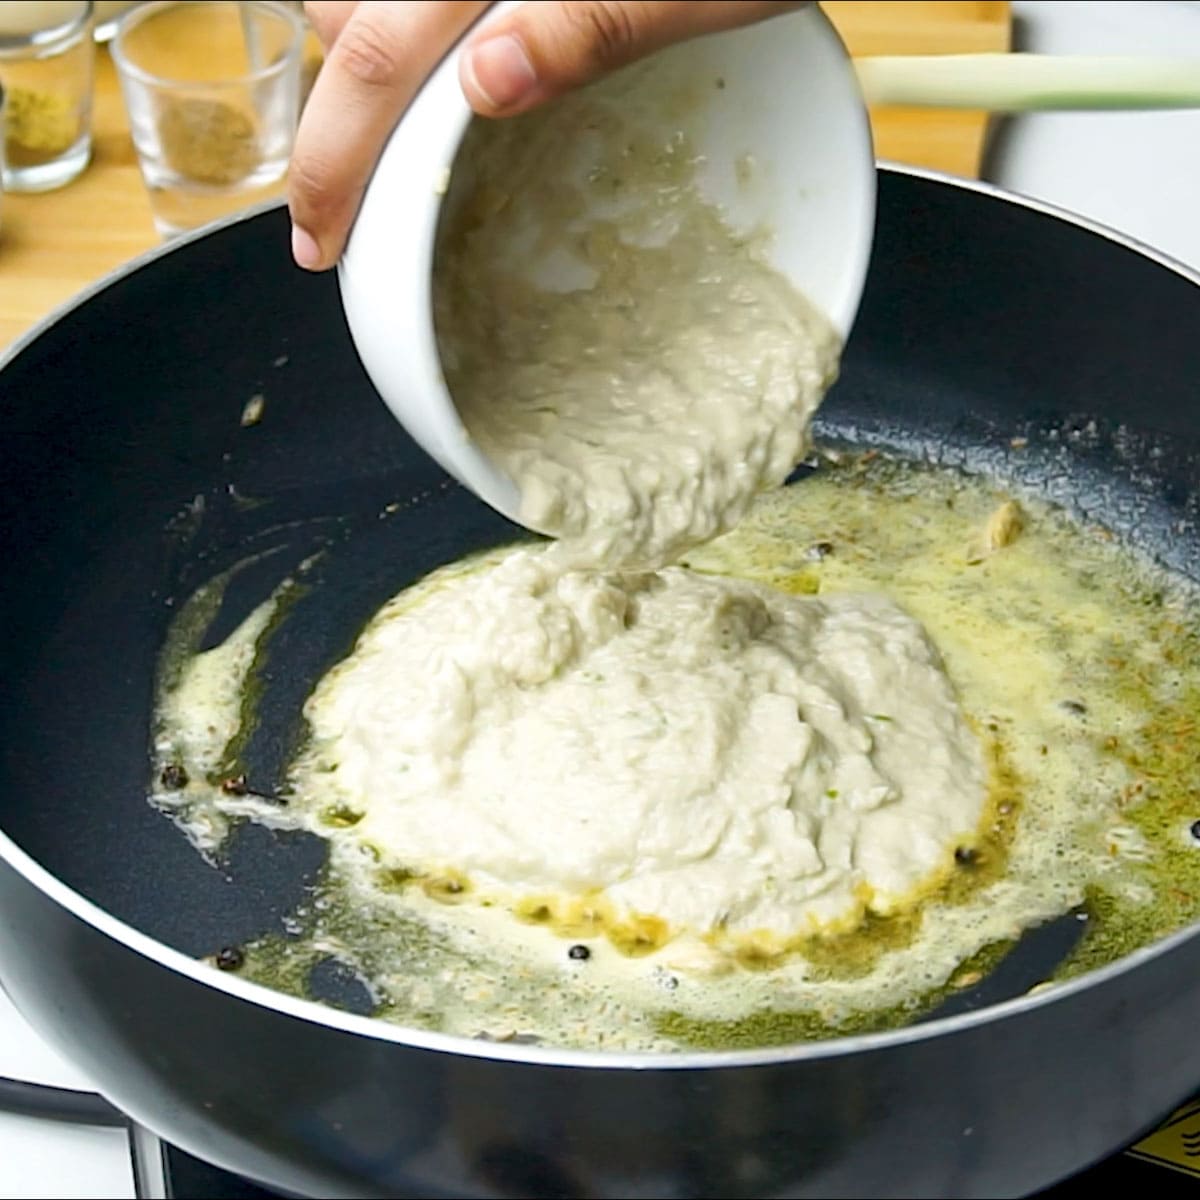 add Cashew Pasteto the pan